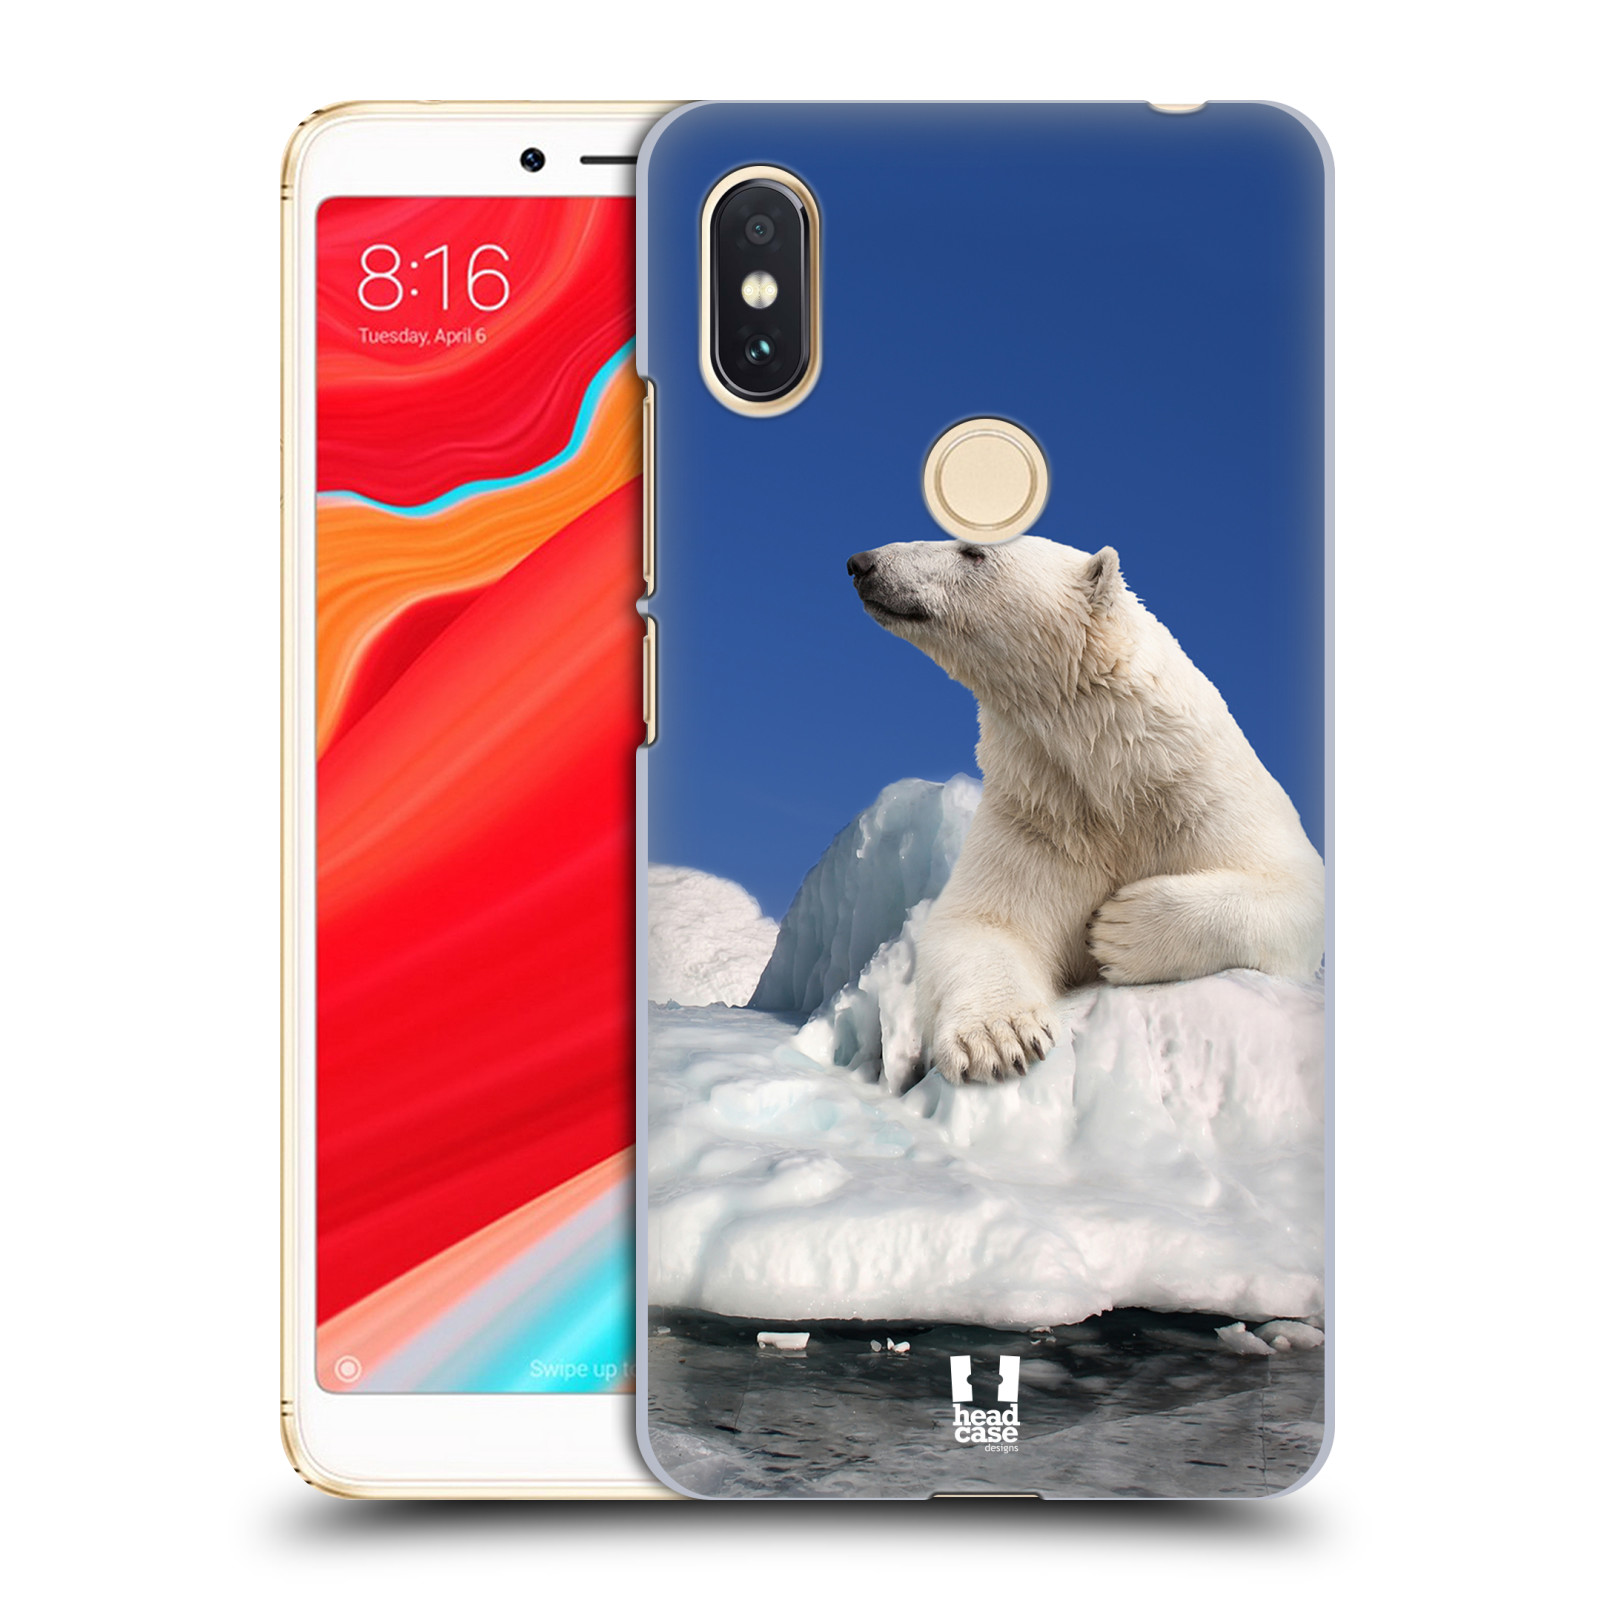 HEAD CASE plastový obal na mobil Xiaomi Redmi S2 vzor Divočina, Divoký život a zvířata foto LEDNÍ MEDVĚD NA LEDOVCI A NEBE MODRÁ